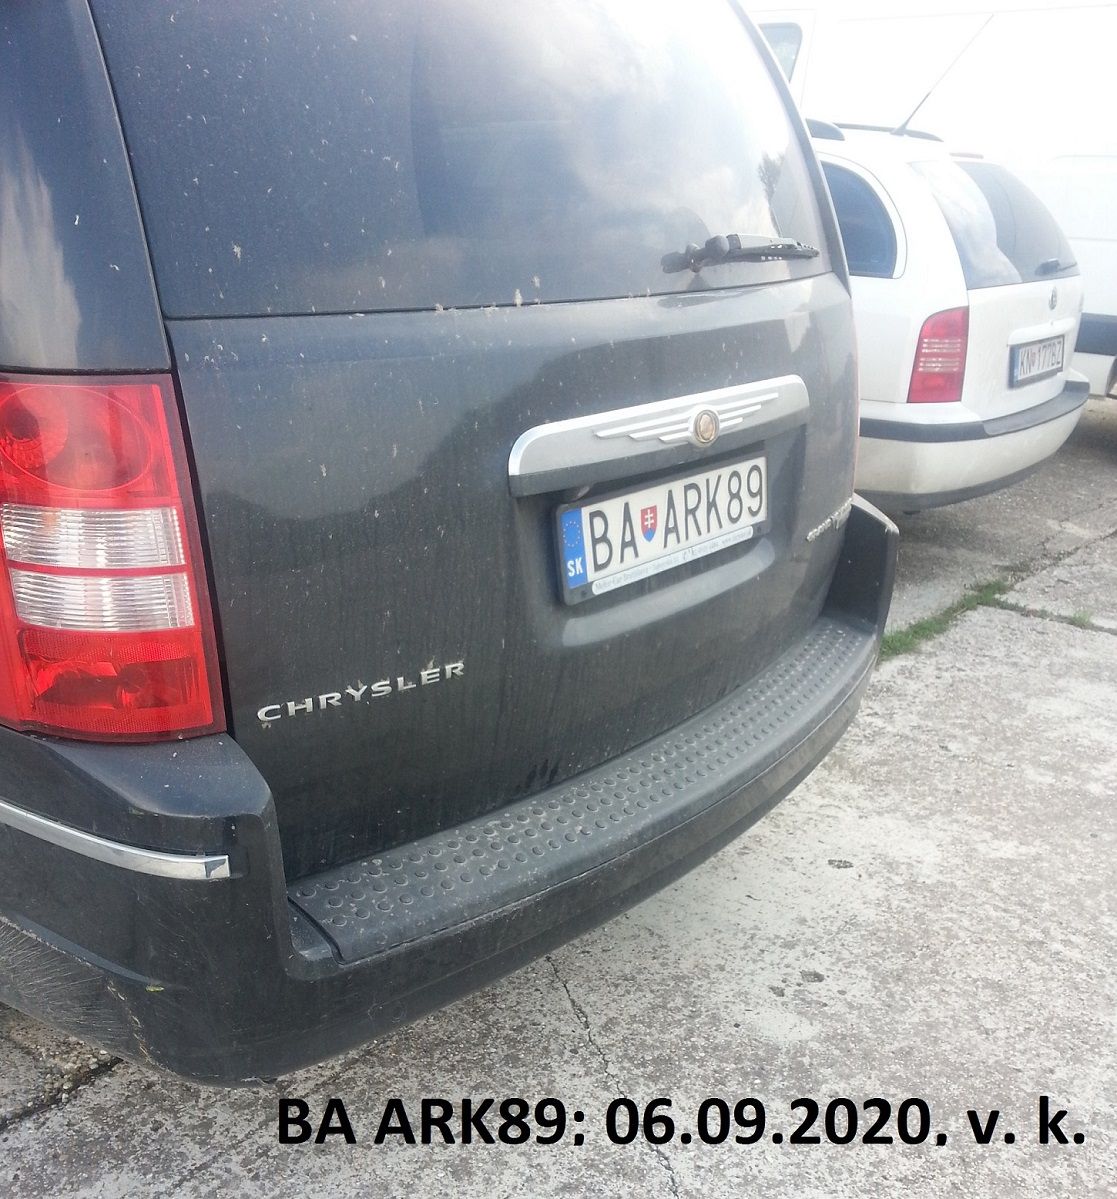 BA ARK89; 09.06.2020, v. k.